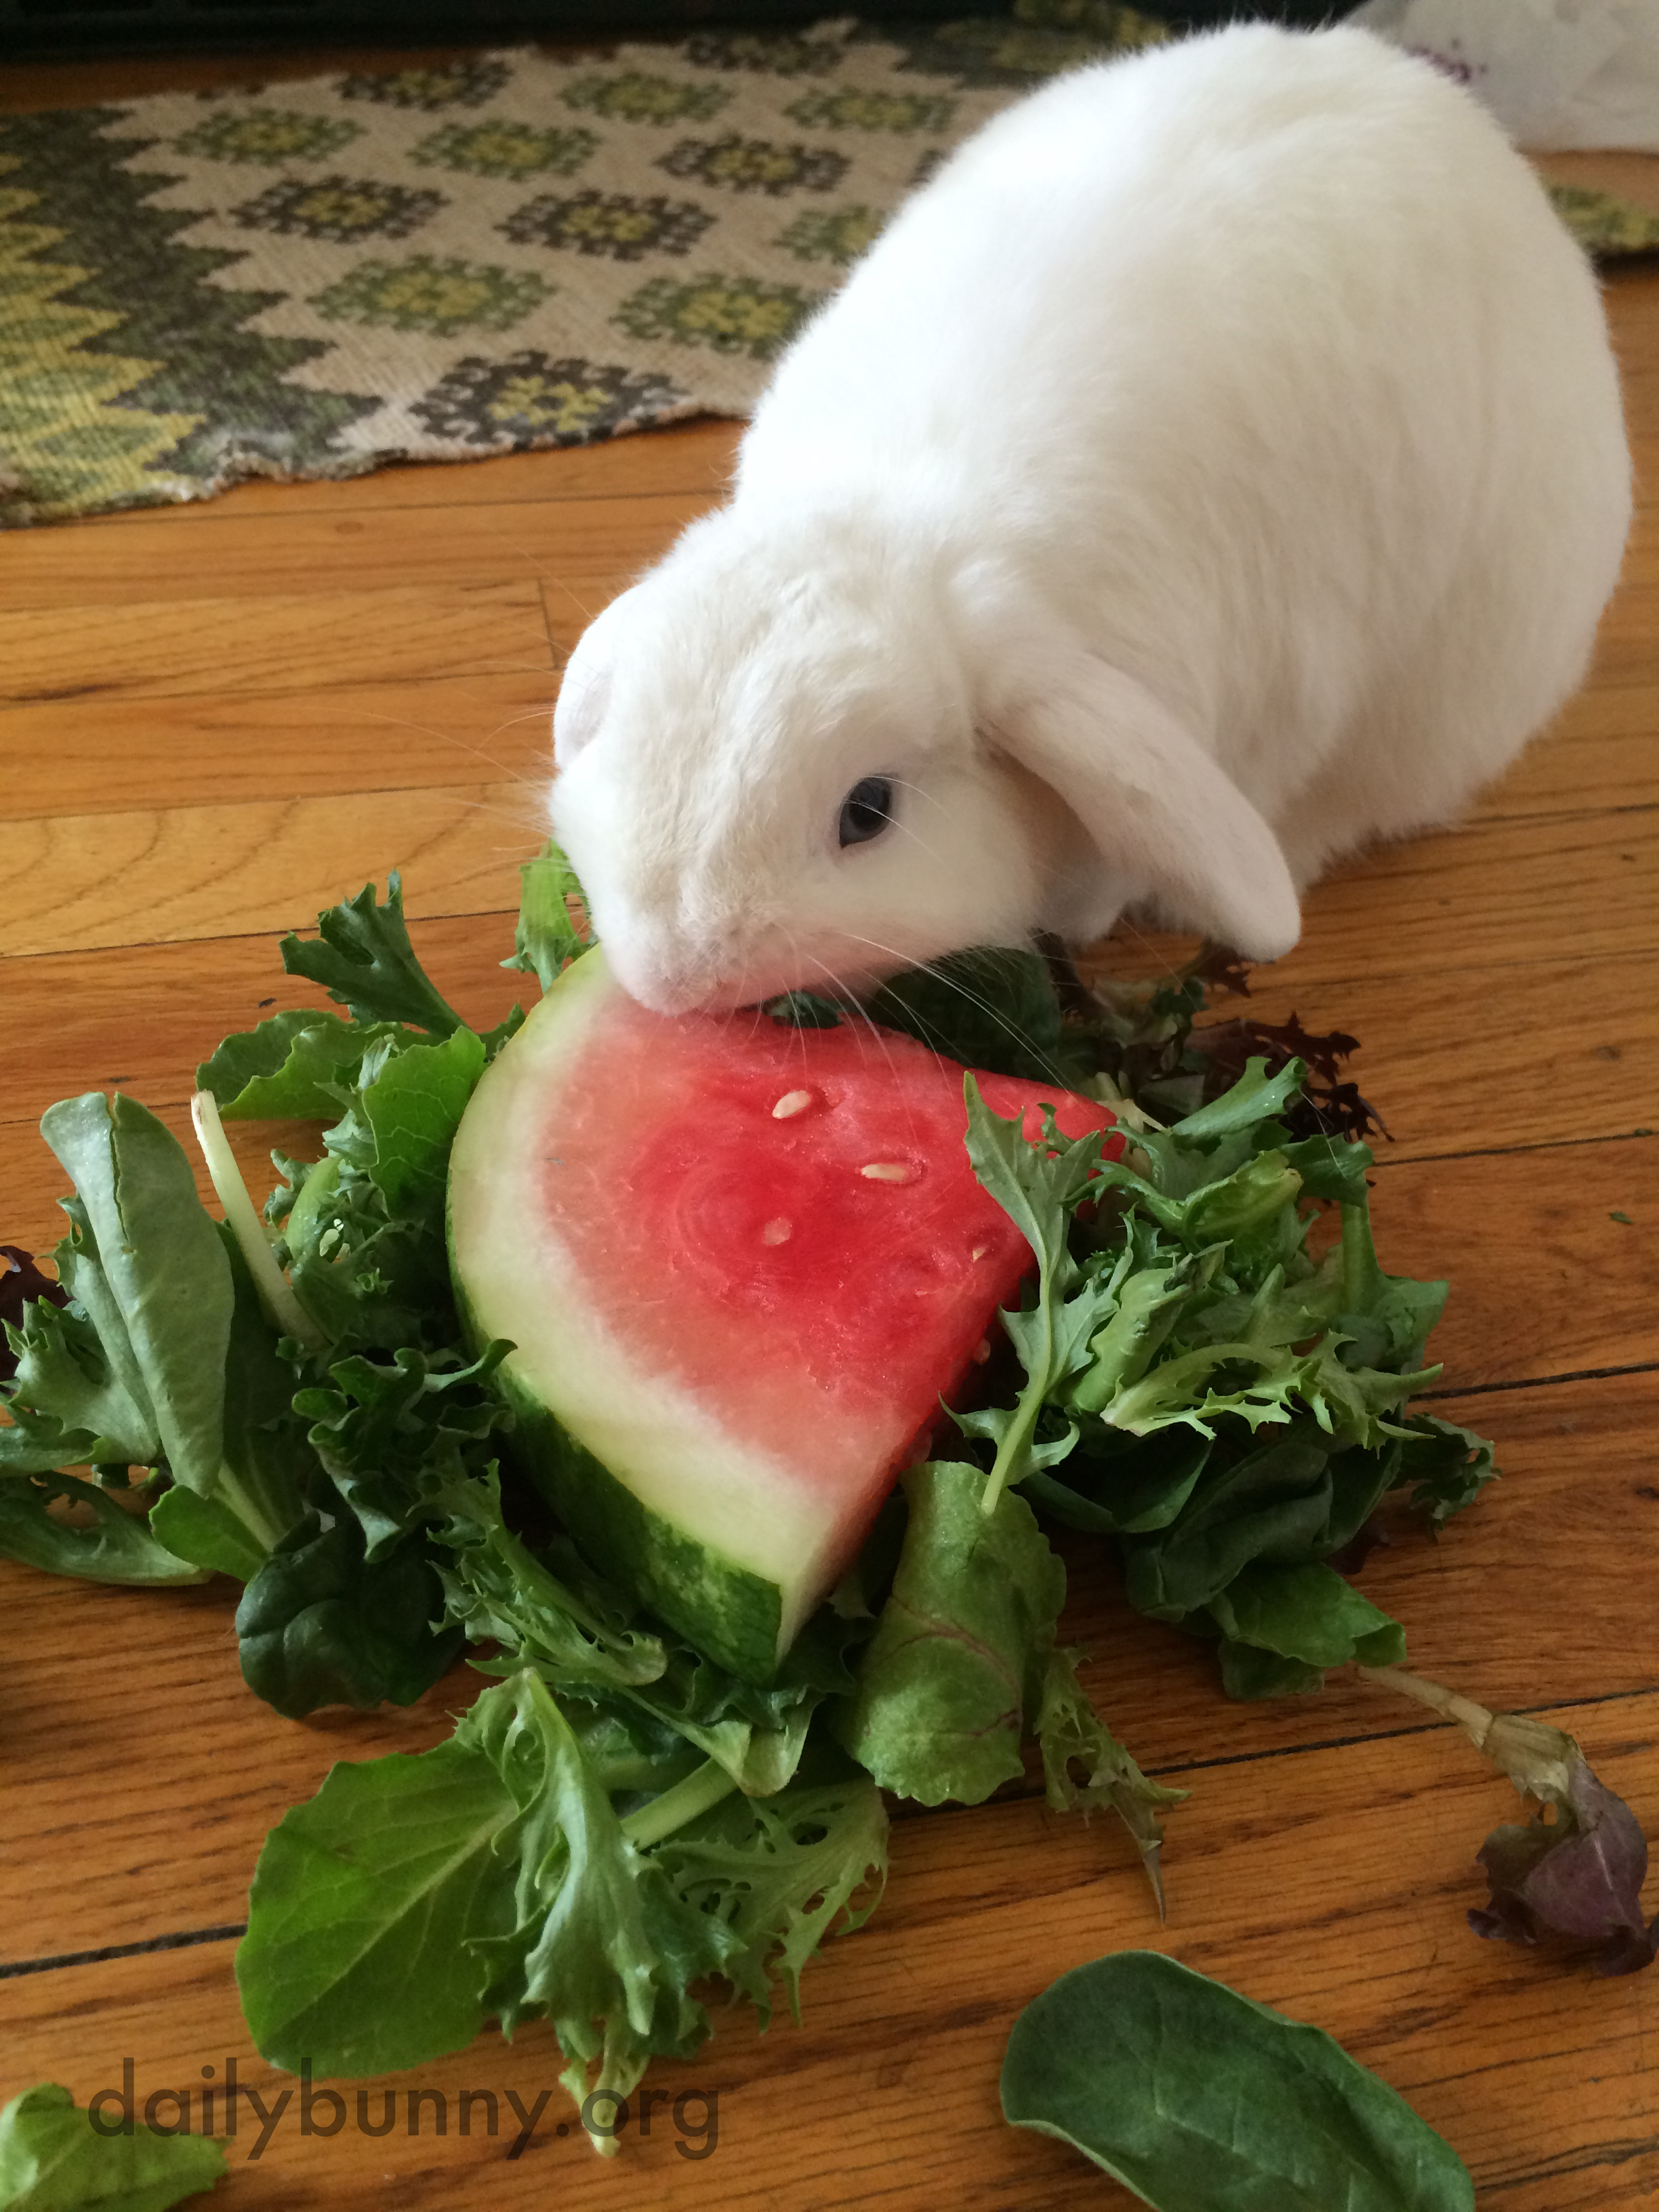 Bunny Enjoys a Bit of Watermelon Salad on a Hot Summer Day